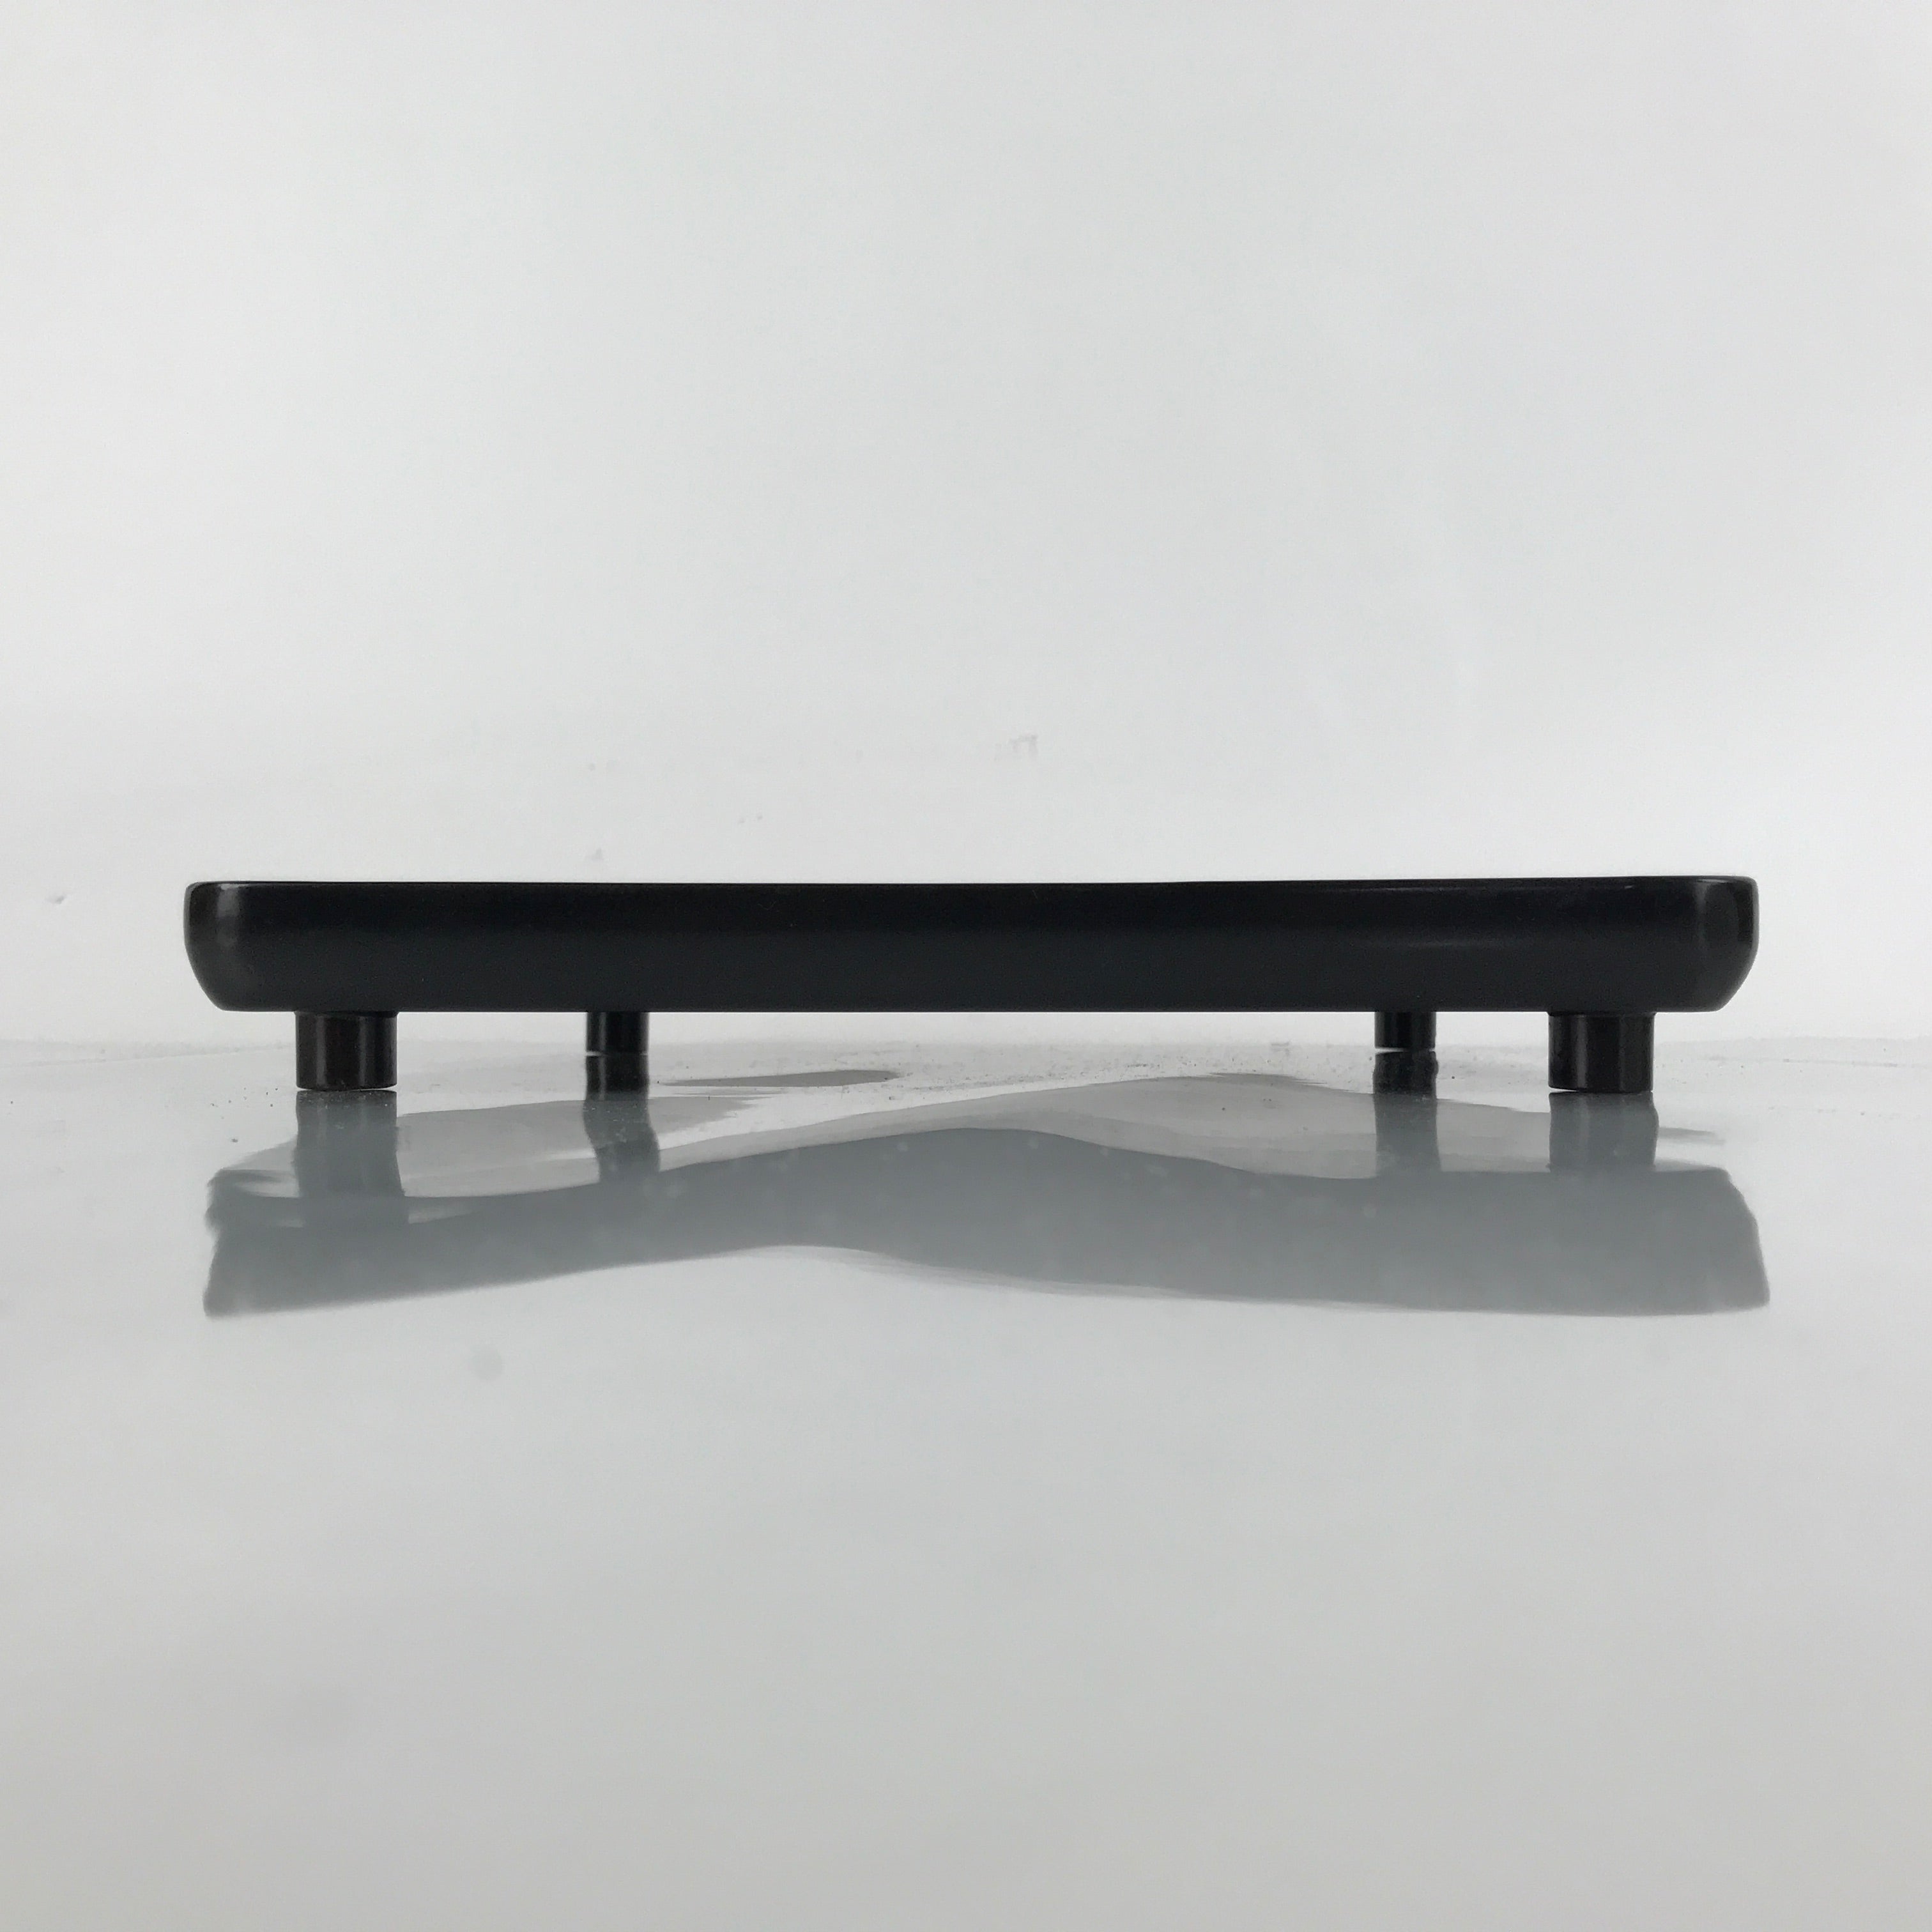 Japanese Wooden Lacquered Legged Table Vtg Ozen Tray Black Nurimono L250